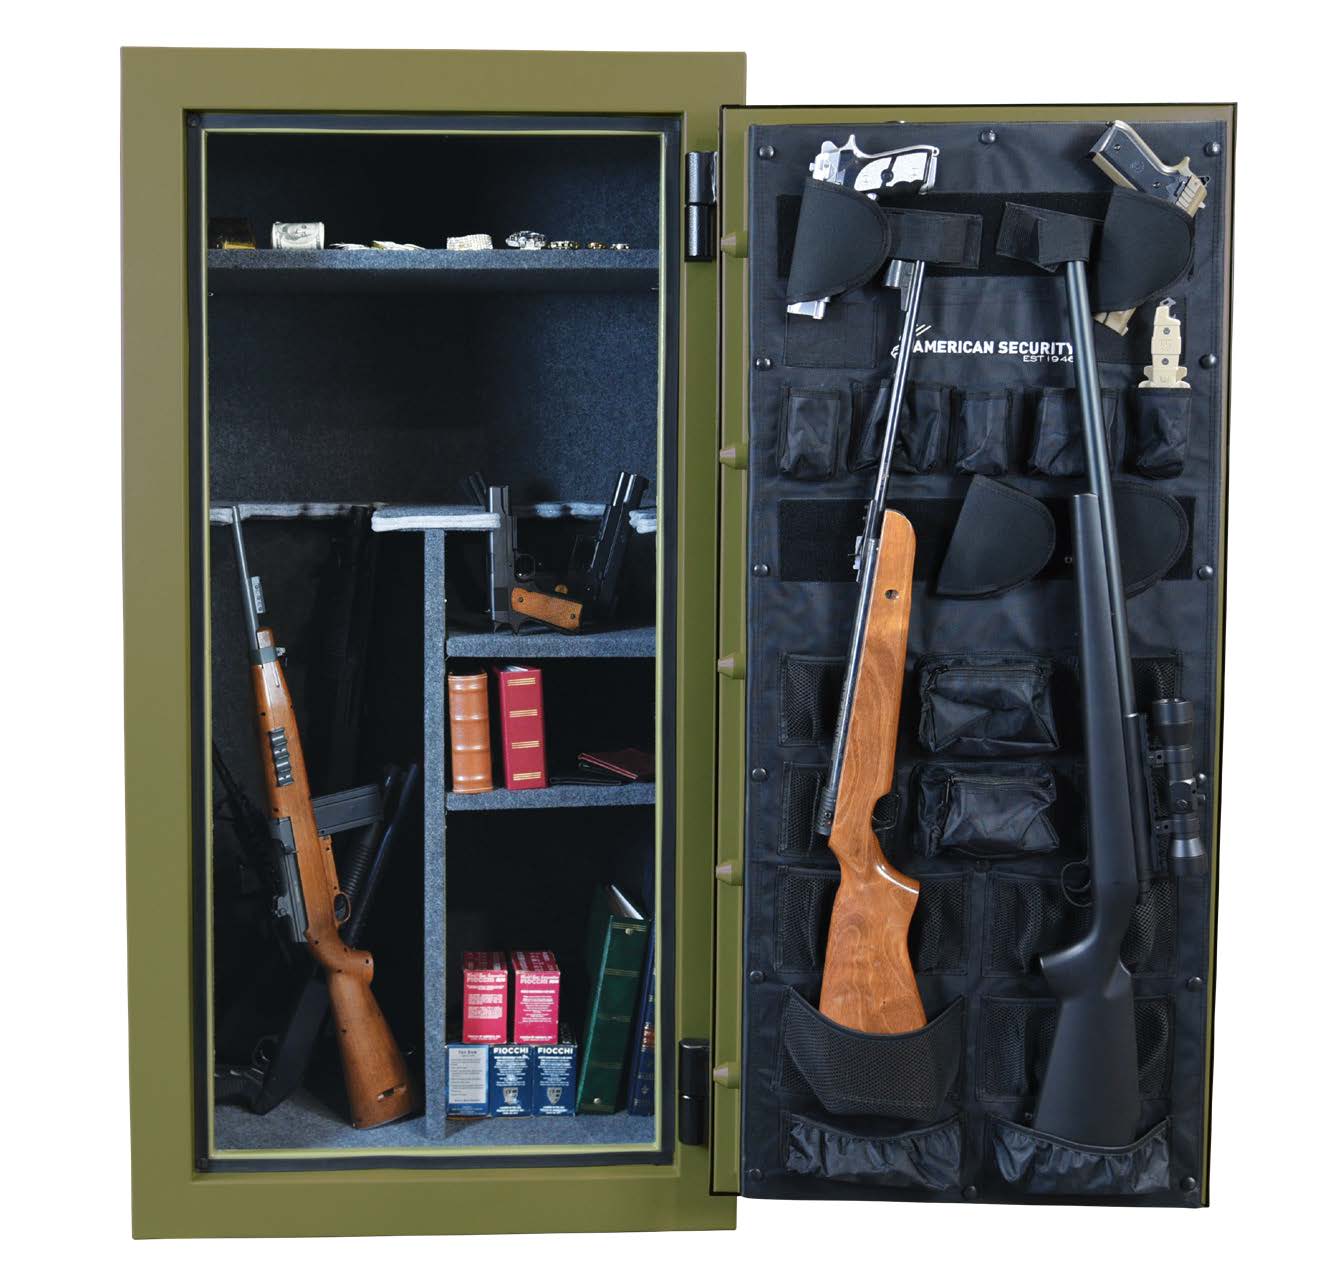 AMSEC TF6030 Rifle & Gun Safe Limited Edition